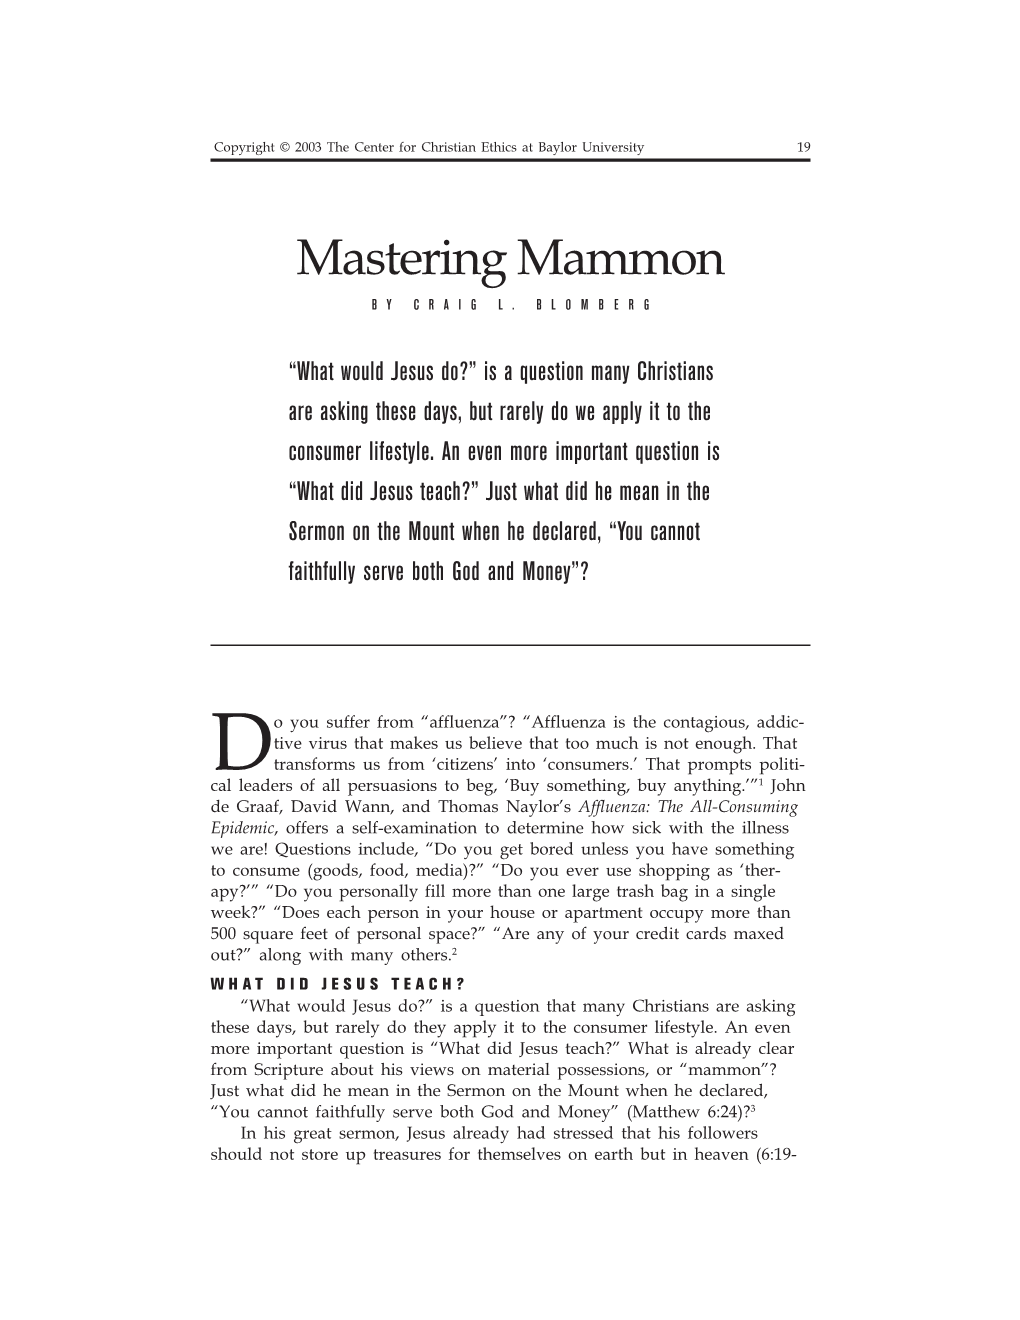 Mastering Mammon by CRAIG L